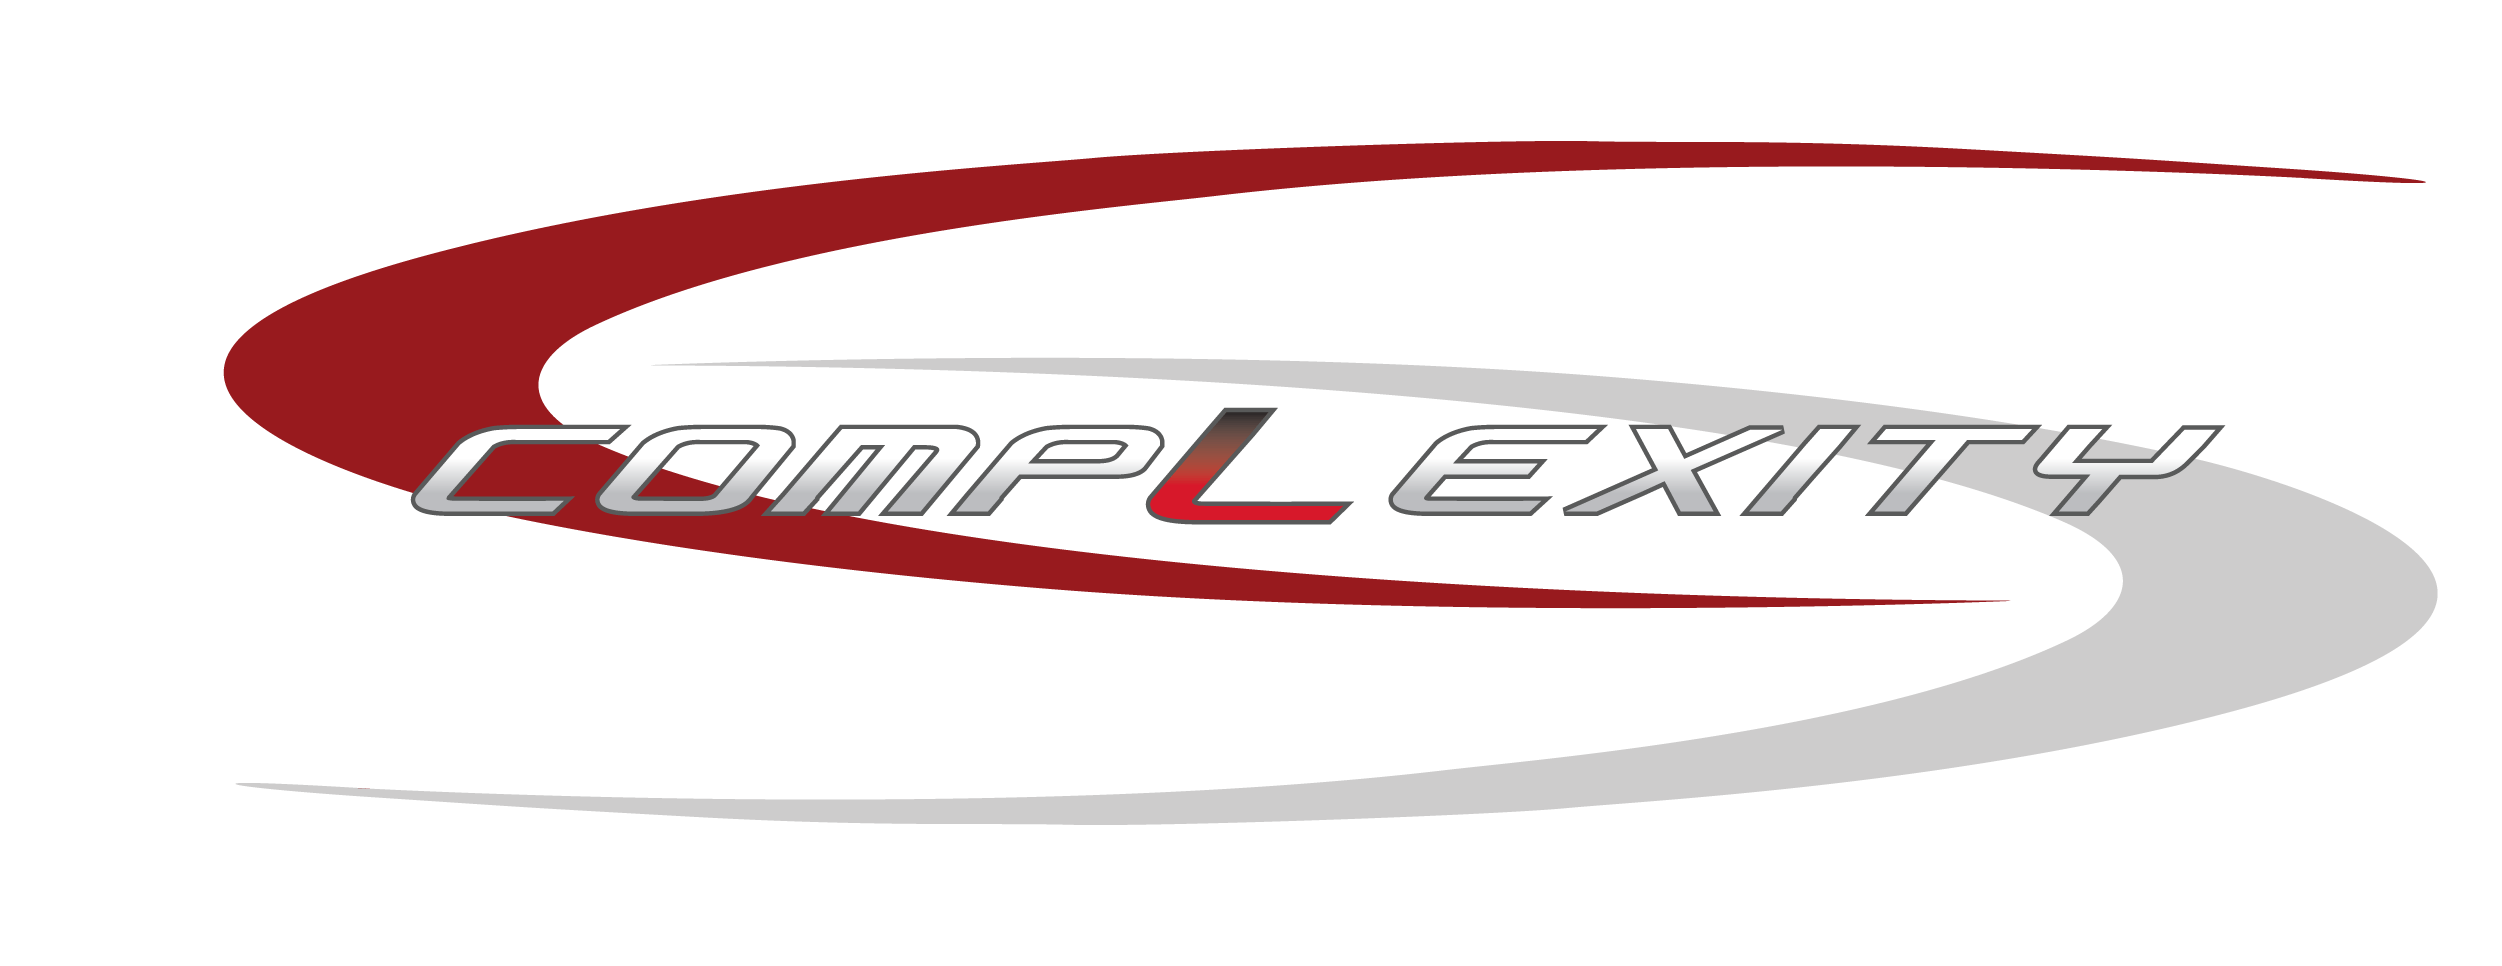 Col Logo - CompLexity announces a new team for League of Legends